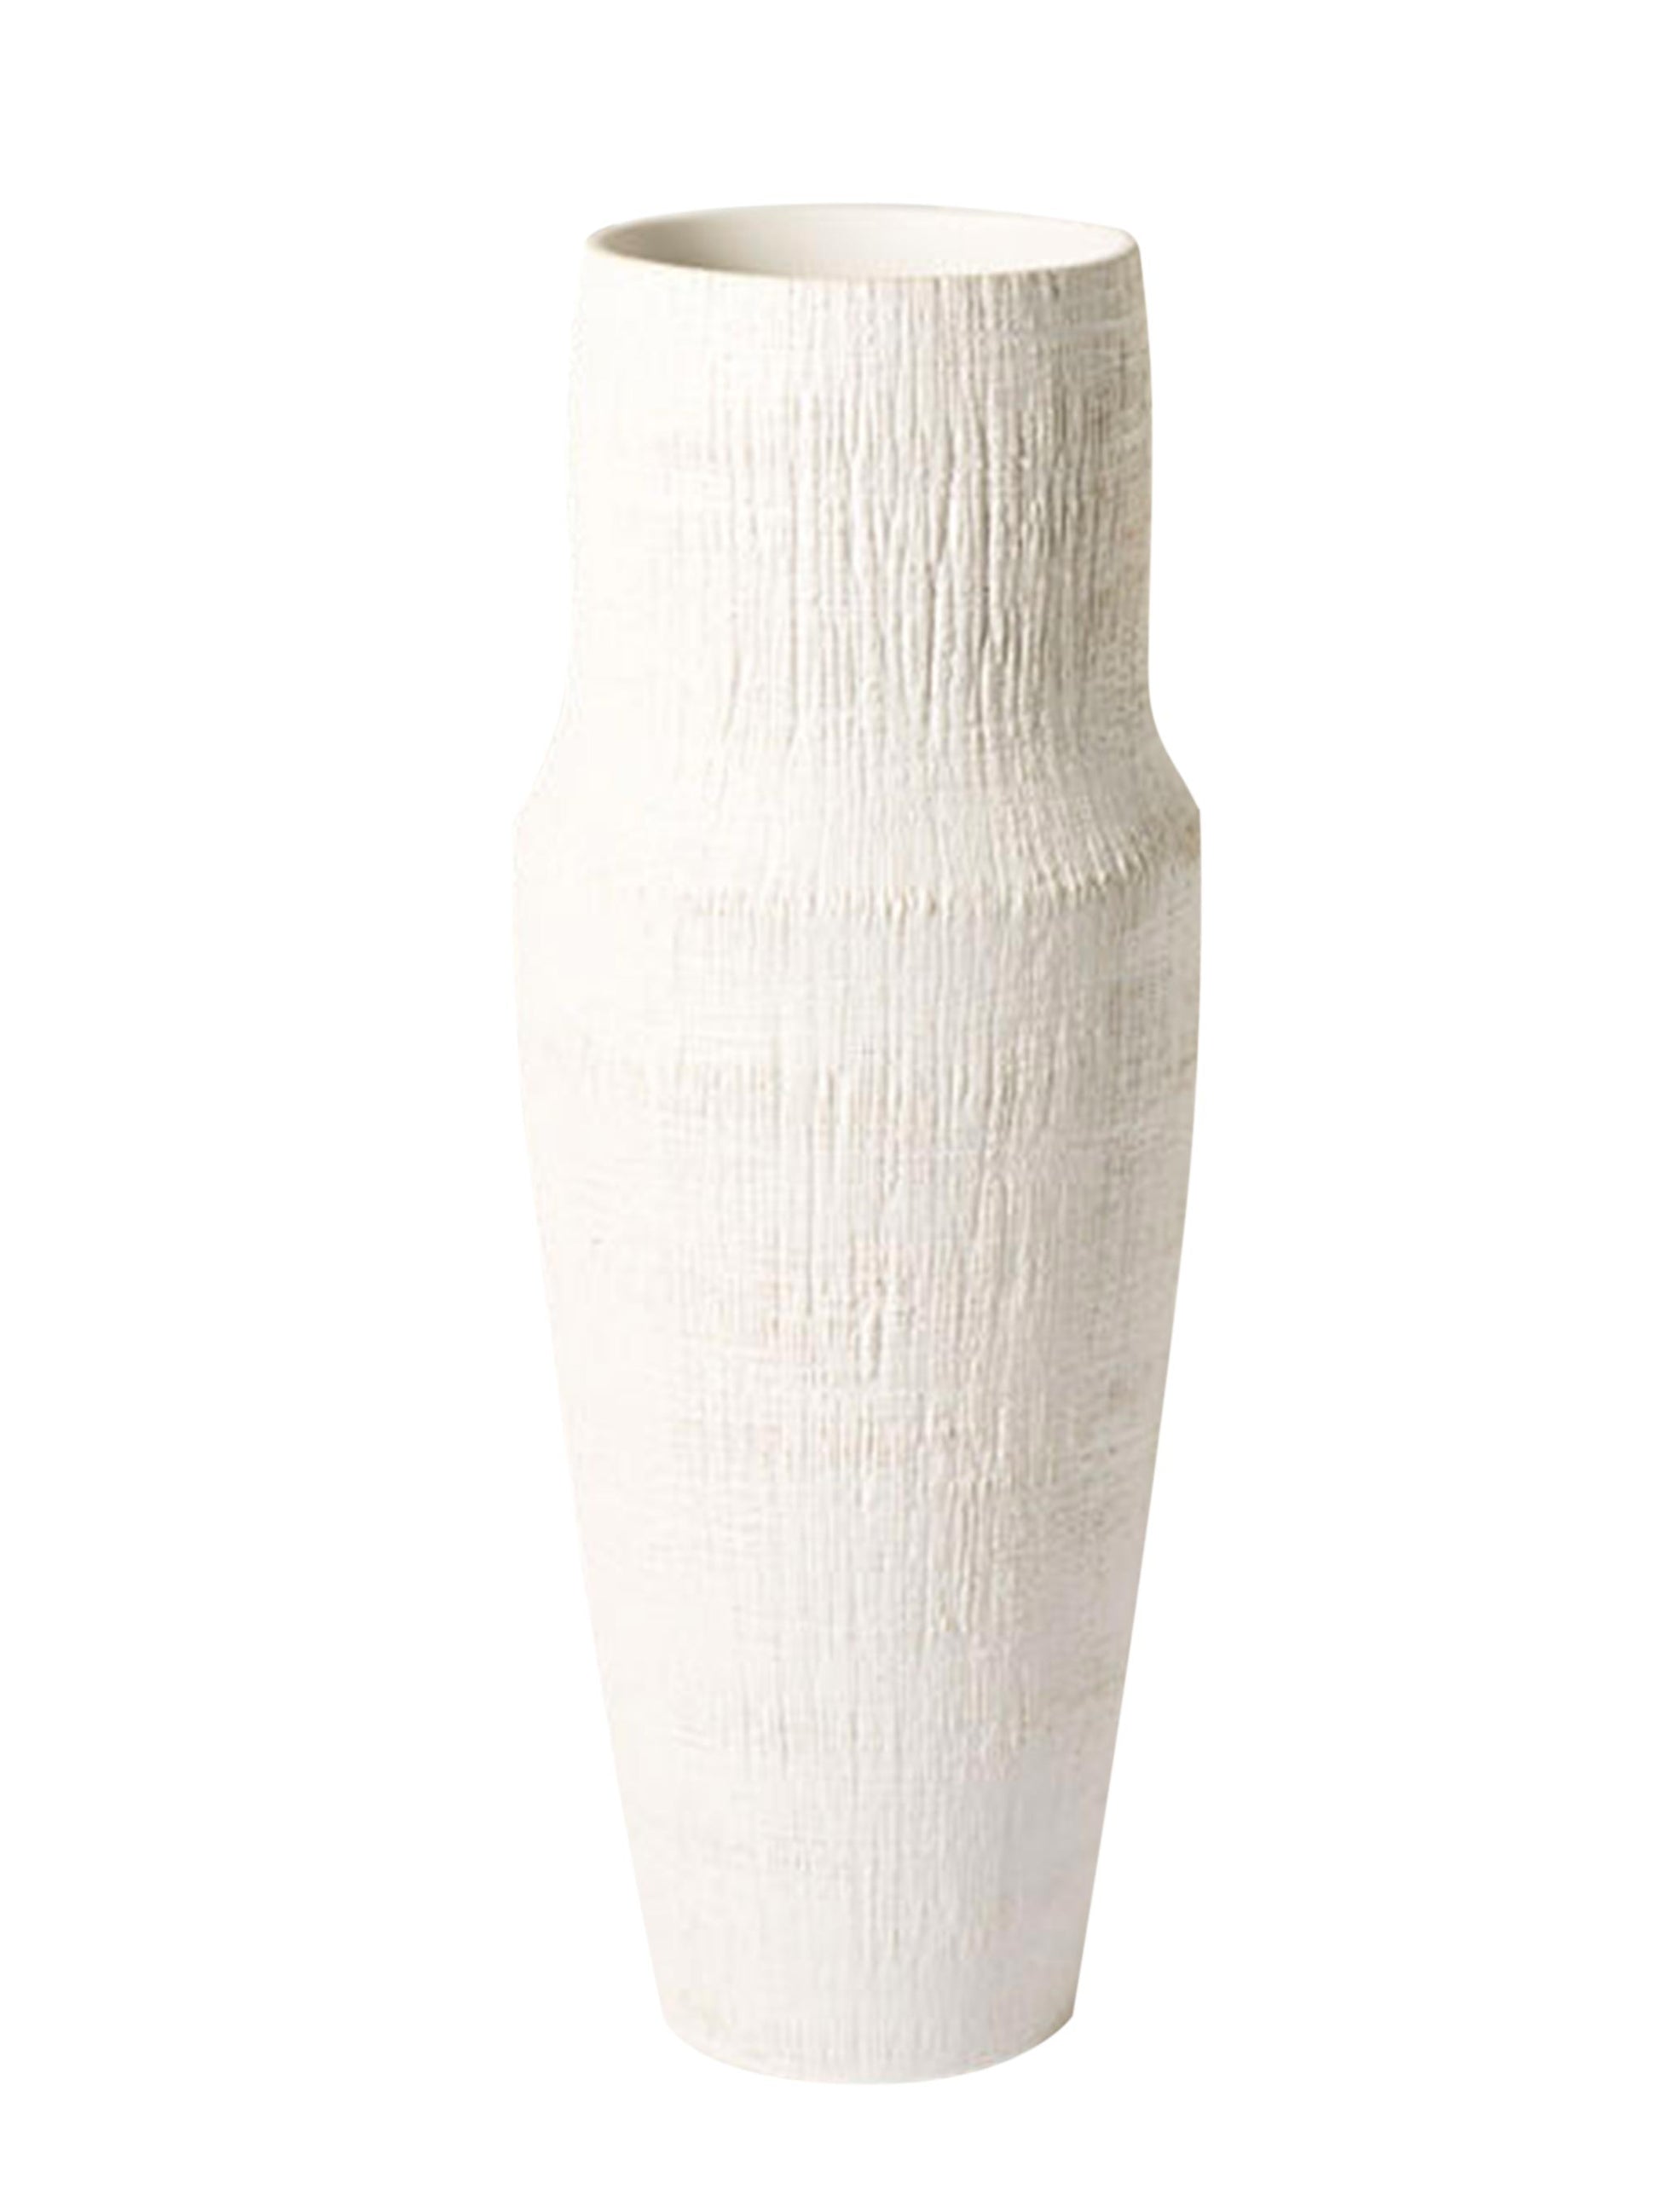 Pulo Organic White Stoneware Tall Vase –Small